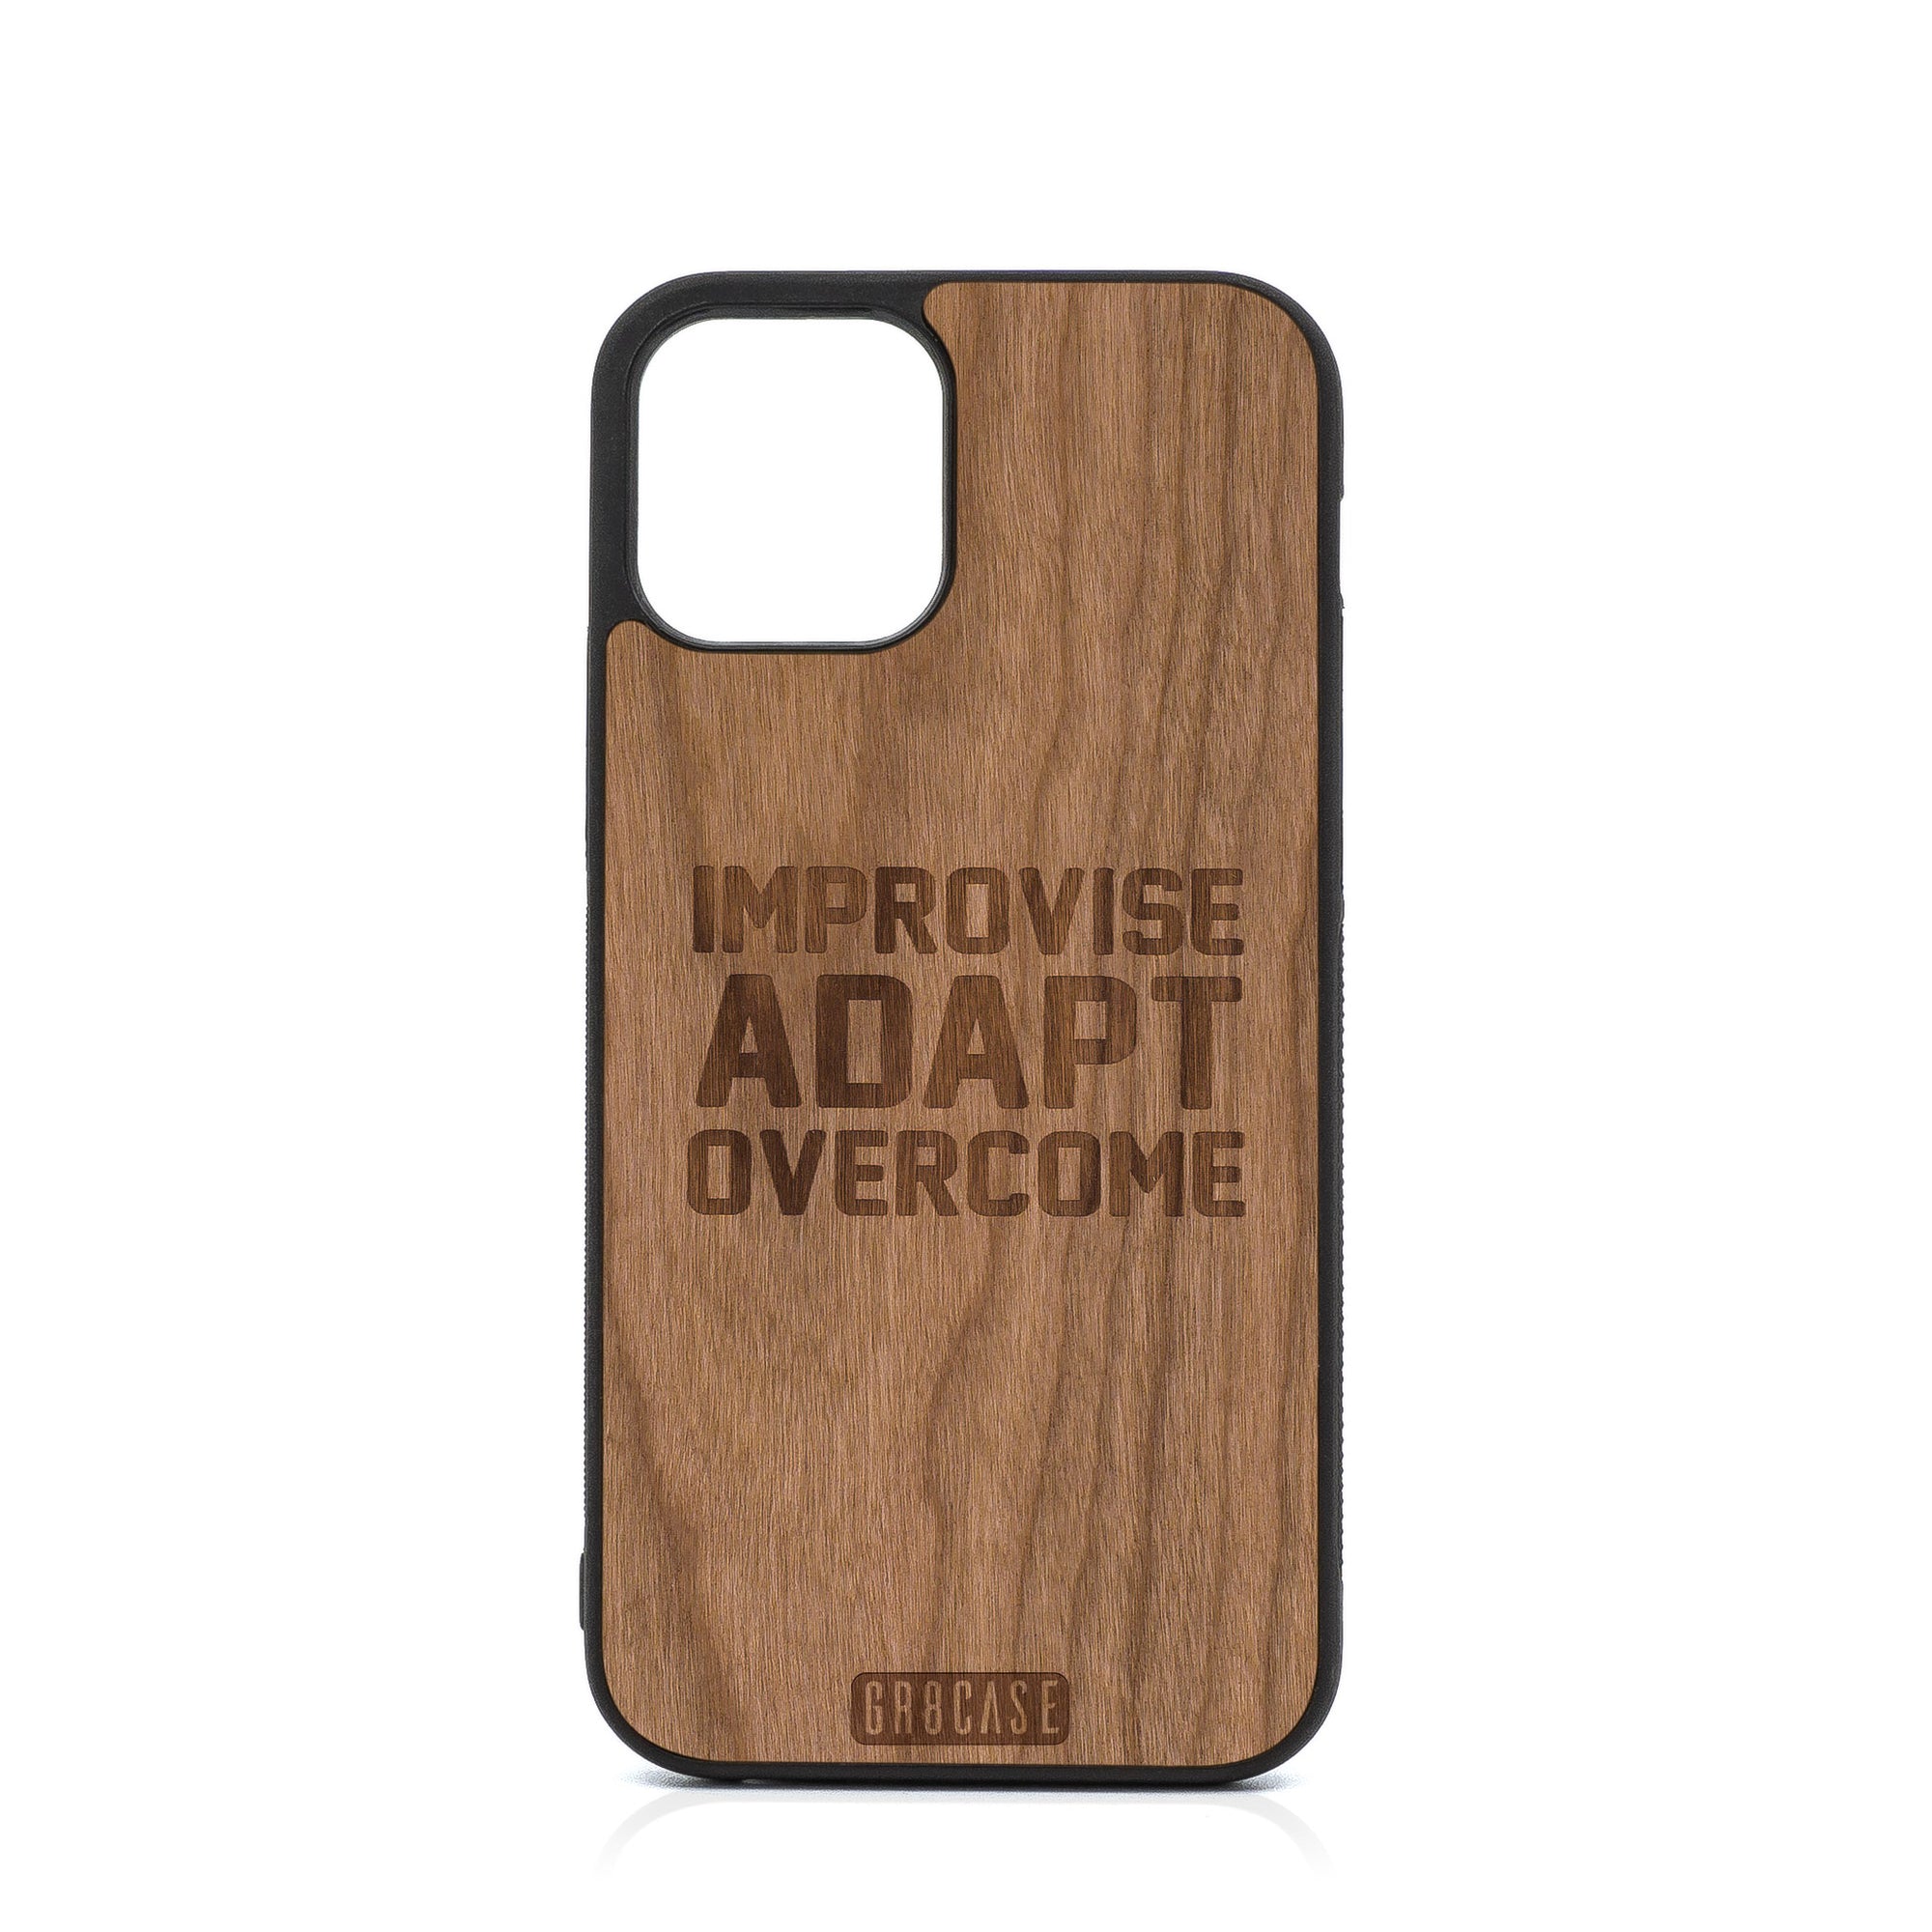 Improvise Adapt Overcome Design Wood Case For iPhone 12